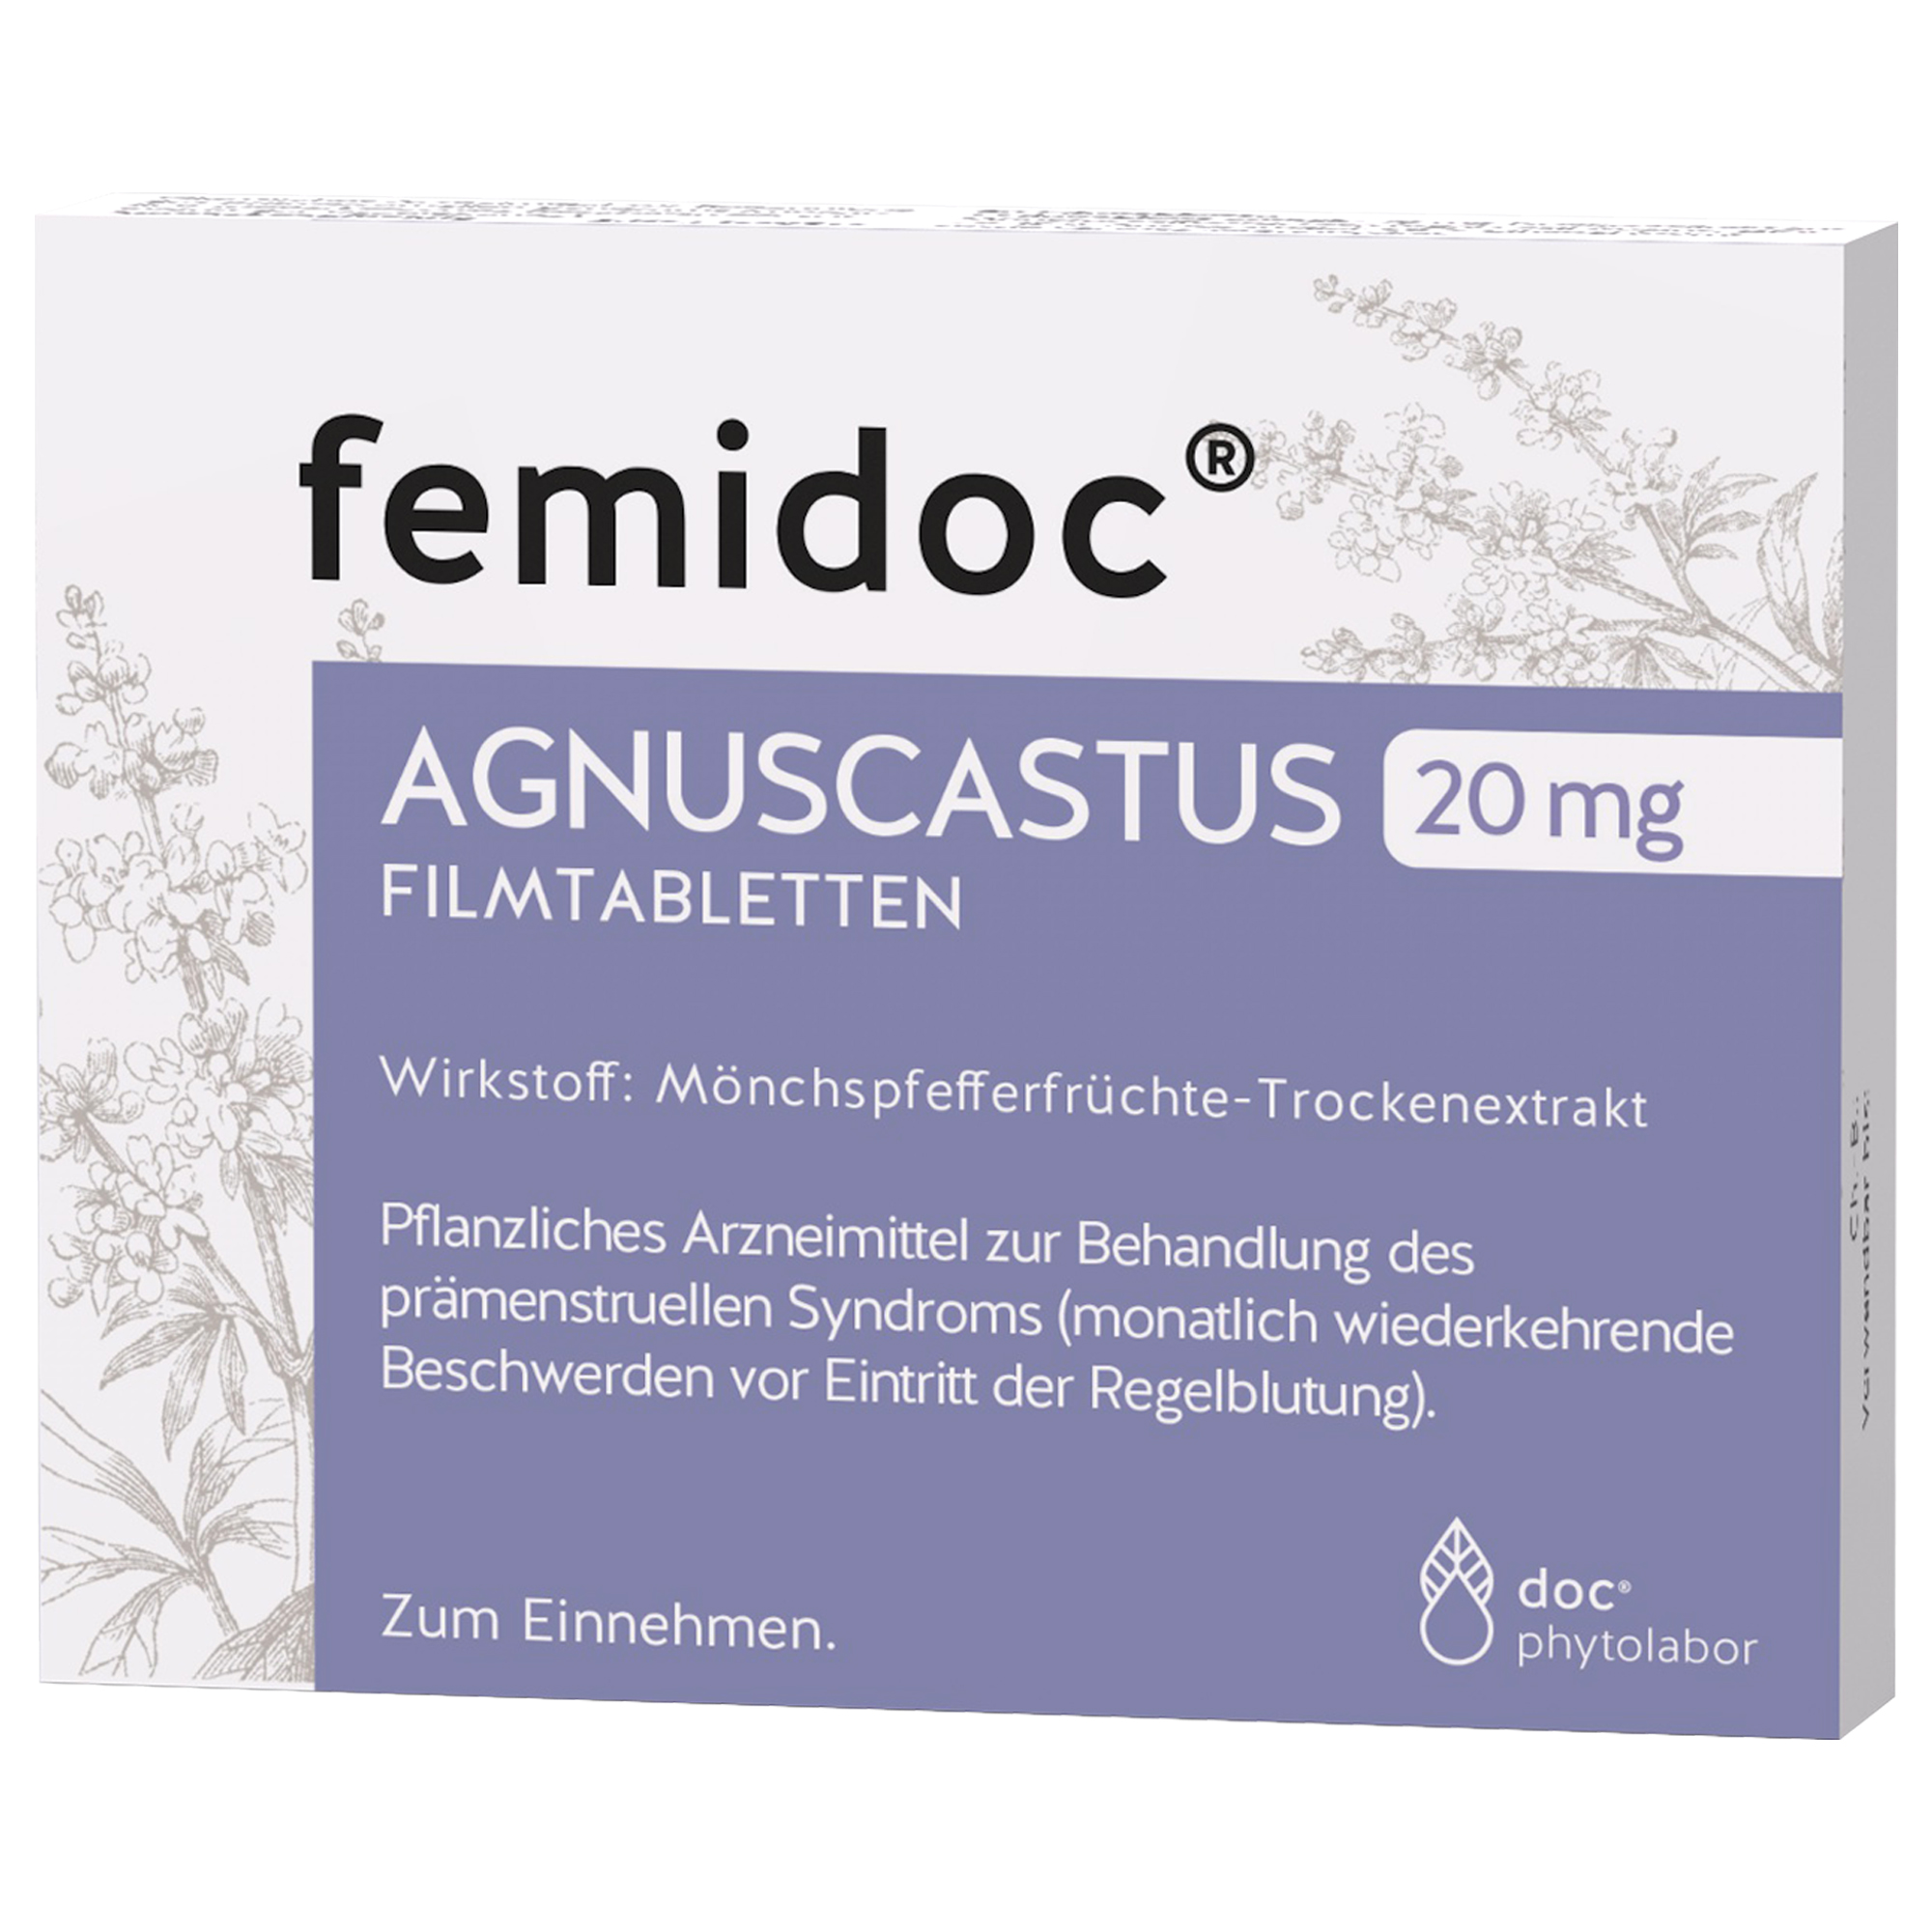 Femidoc Agnuscastus 20 mg - Filmtabletten